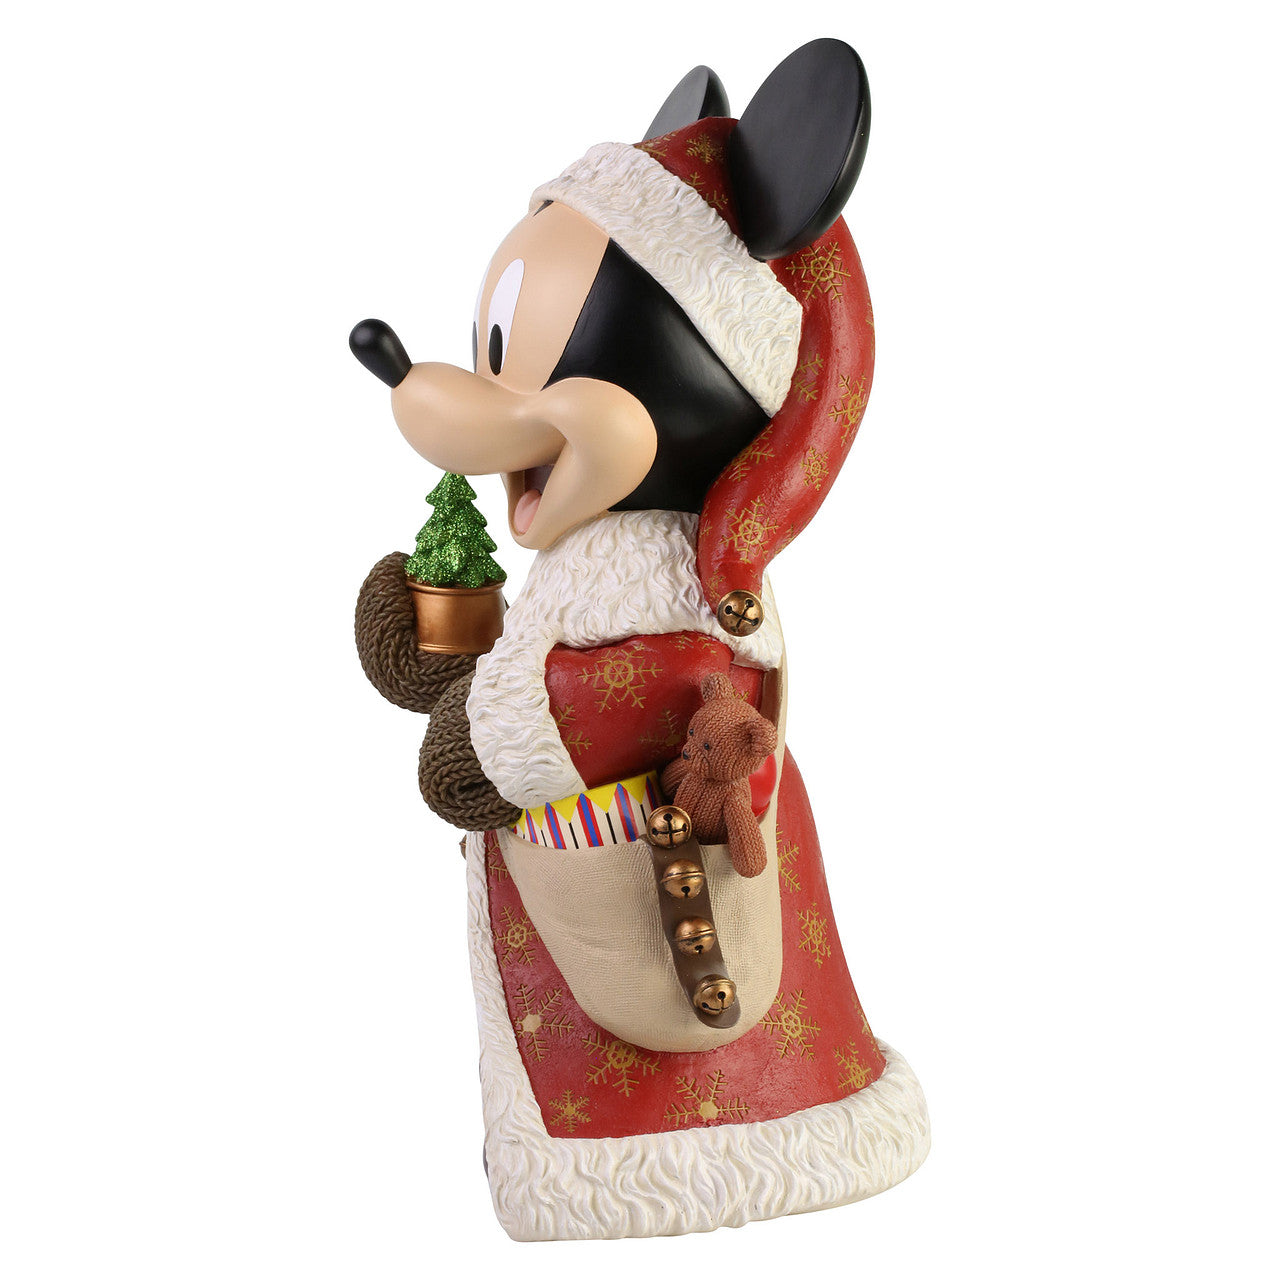 Santa Mickey Mouse - Statement Figurine